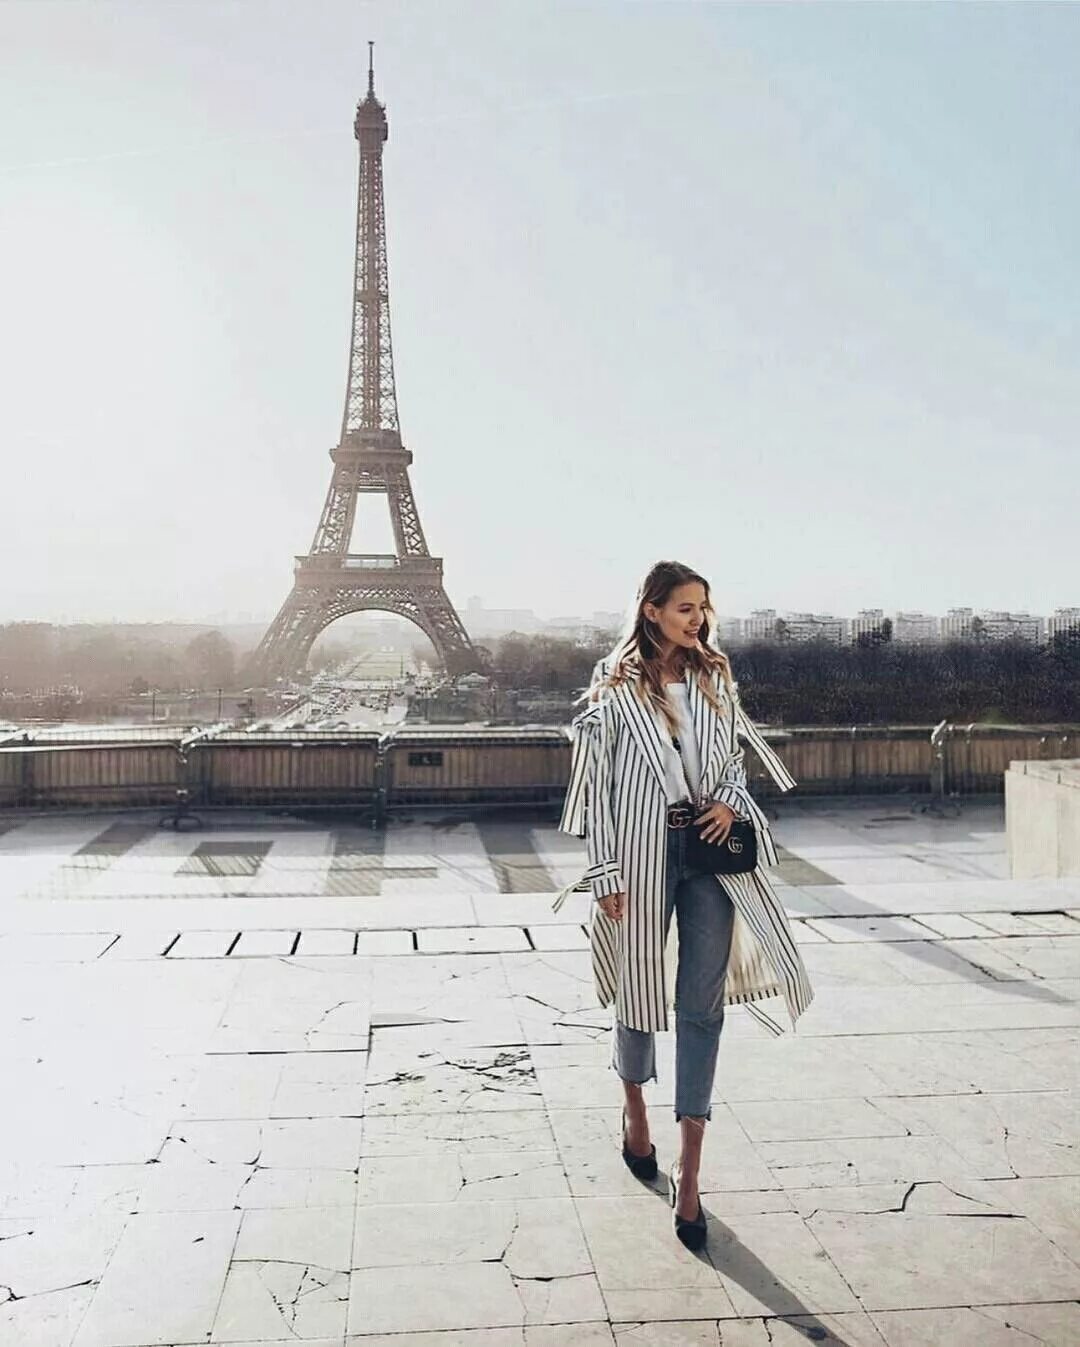 Скучаю по парижу. Фотосессия в стиле Париж. Поездка в Париж образ. Образ для прогулки по Парижу. Французская мода.